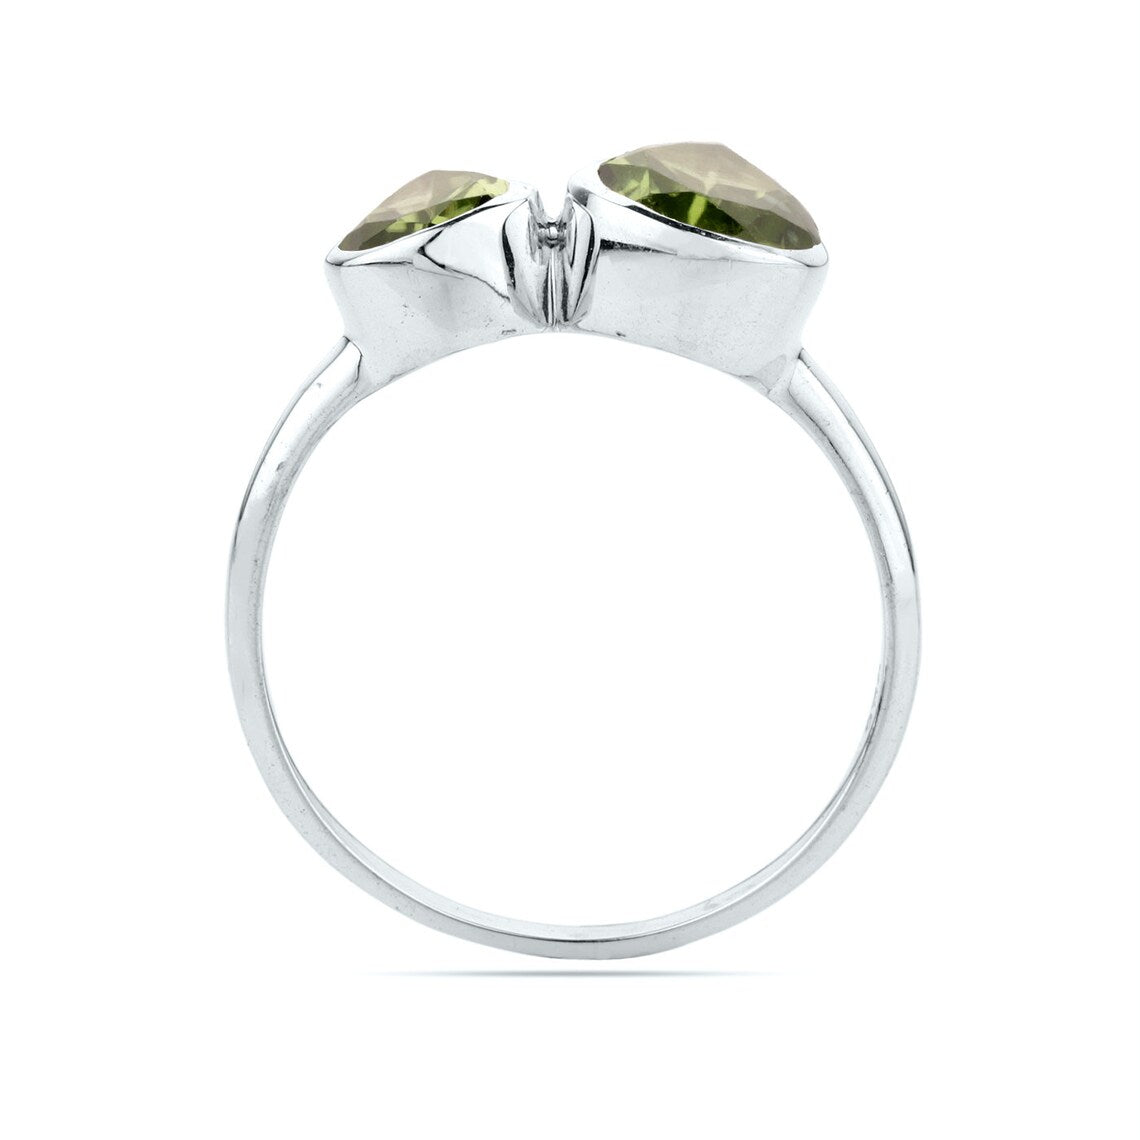 Beautiful Peridot Ring, Natural Peridot 925 Sterling Silver Ring - Peridot Ring - Peridot Pear Cut Ring - Handmade Ring - Dainty Ring